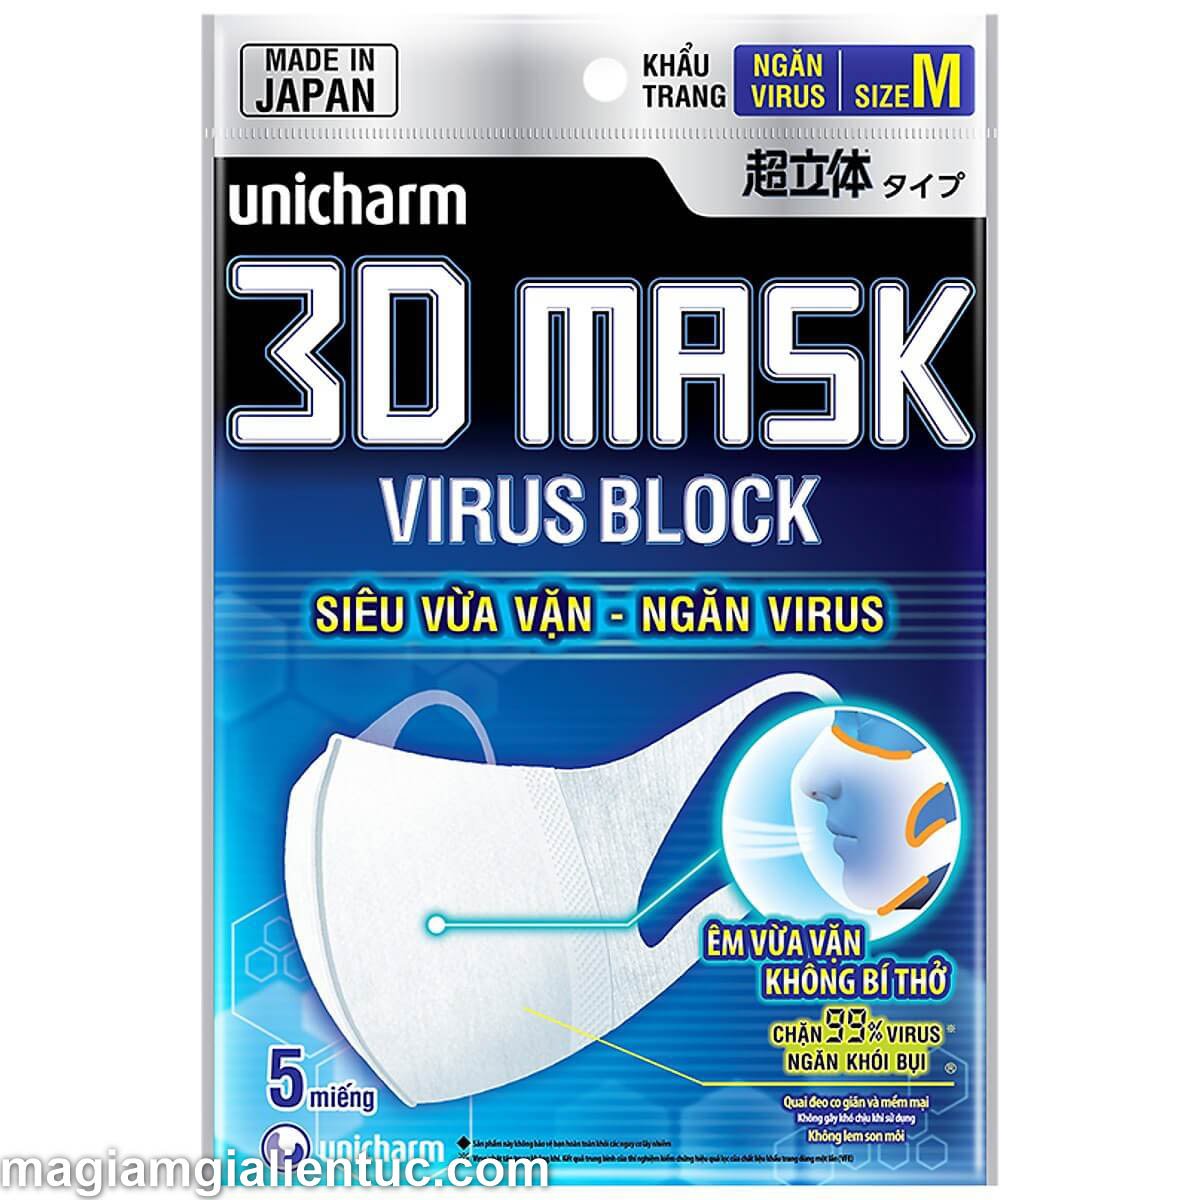 Unicharm 3D Mask